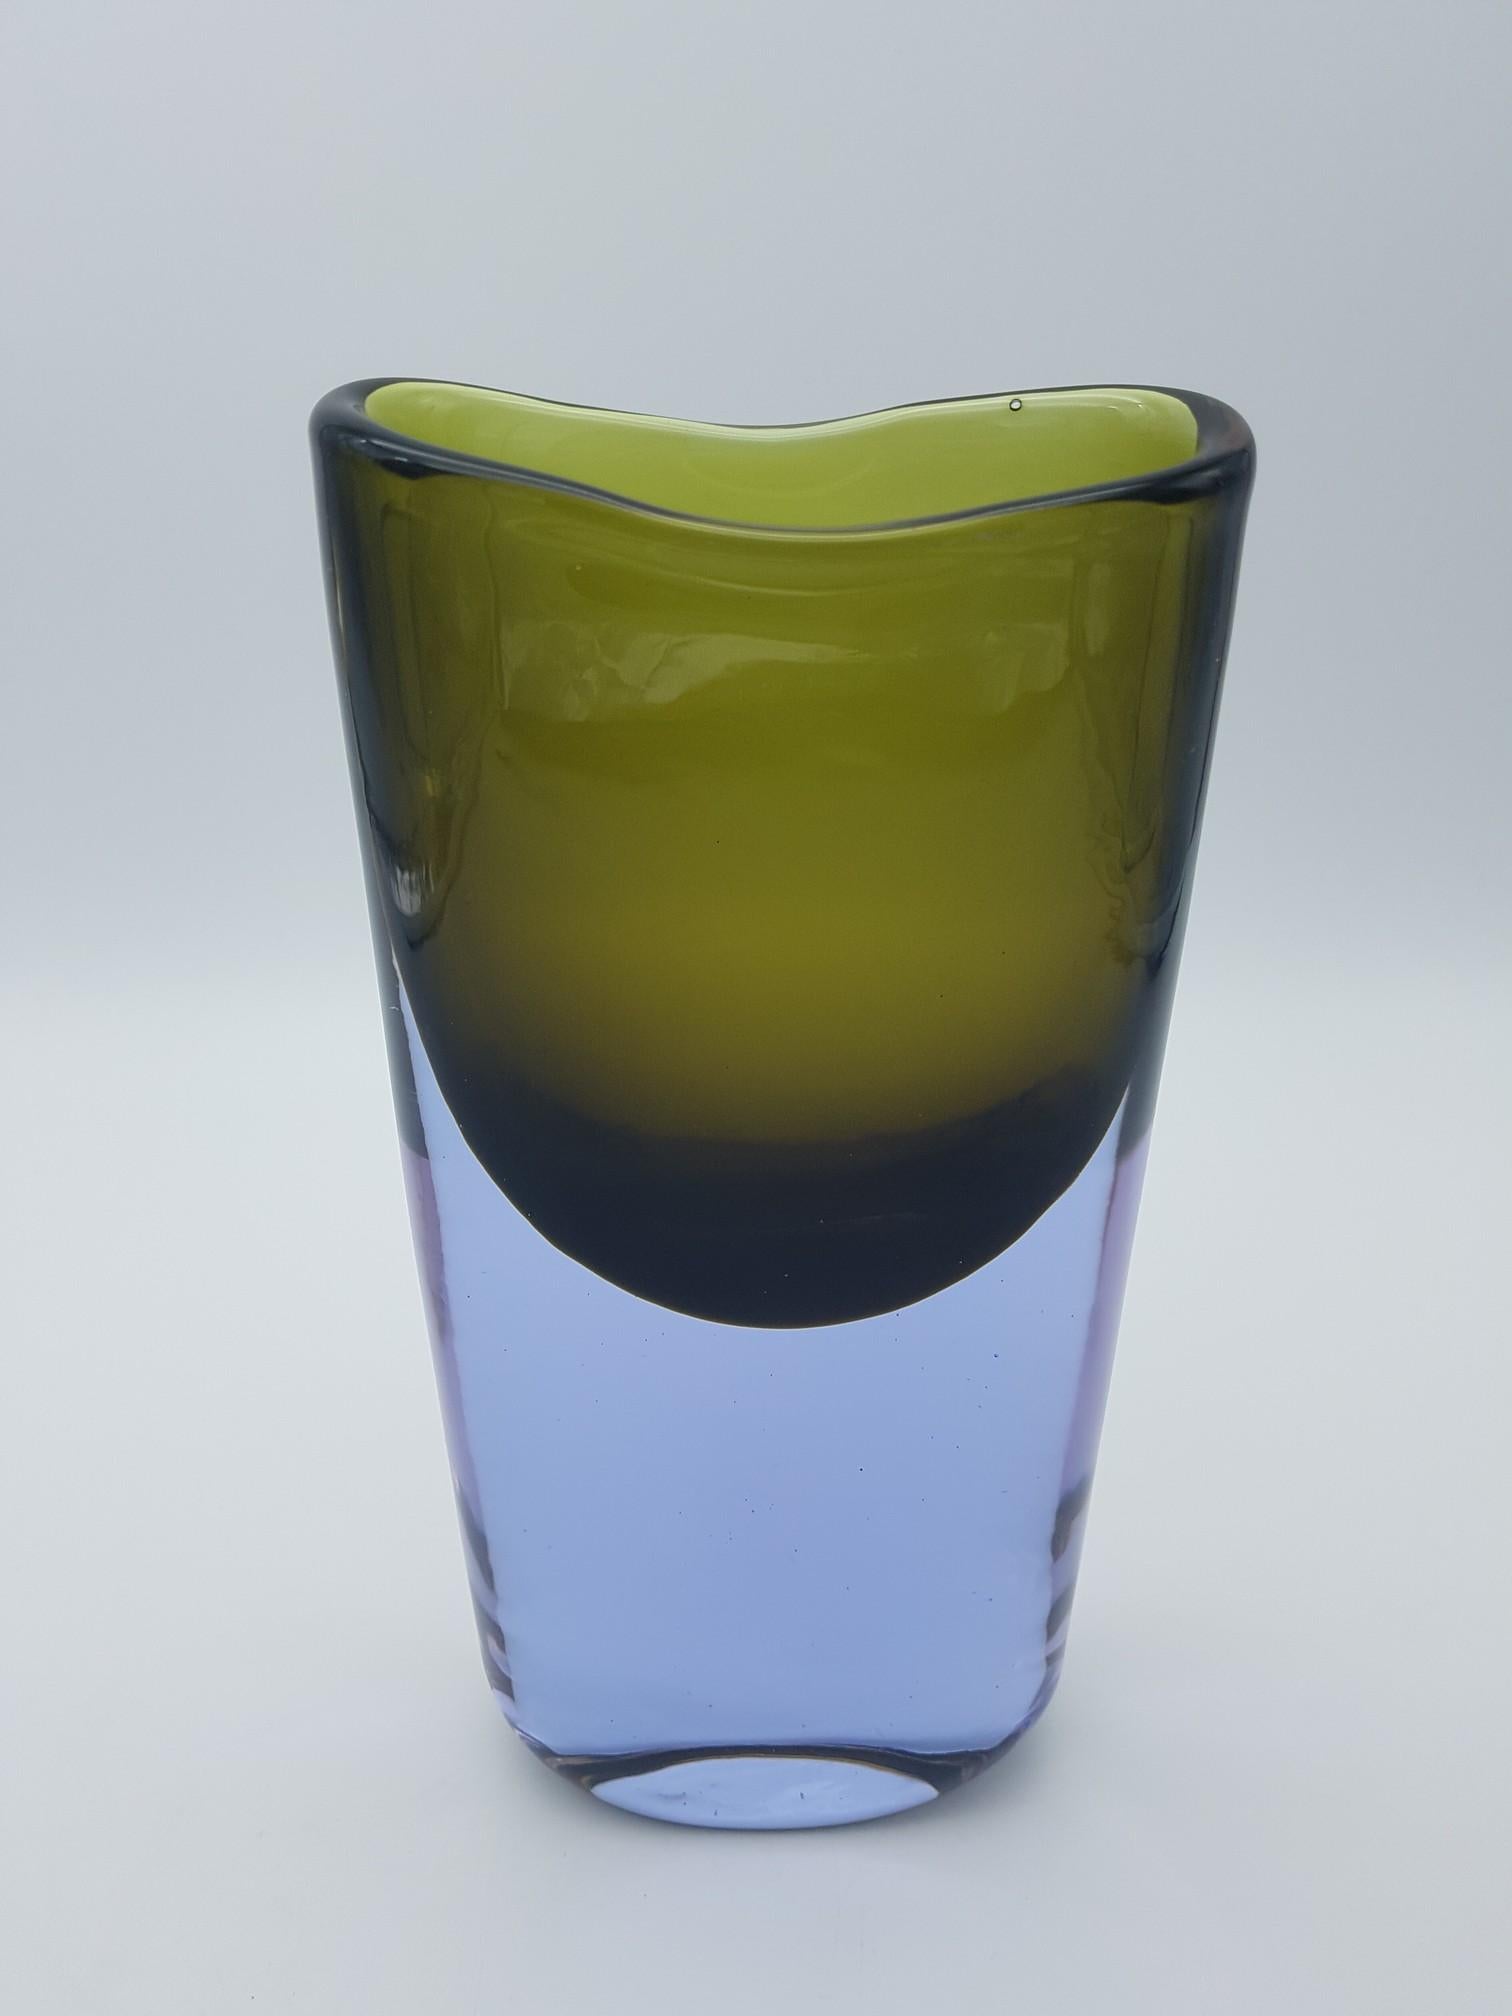 Murano Glass Vase, Lavander and Green by Cenedese Gino, Designer Antonio da Ros  For Sale 3